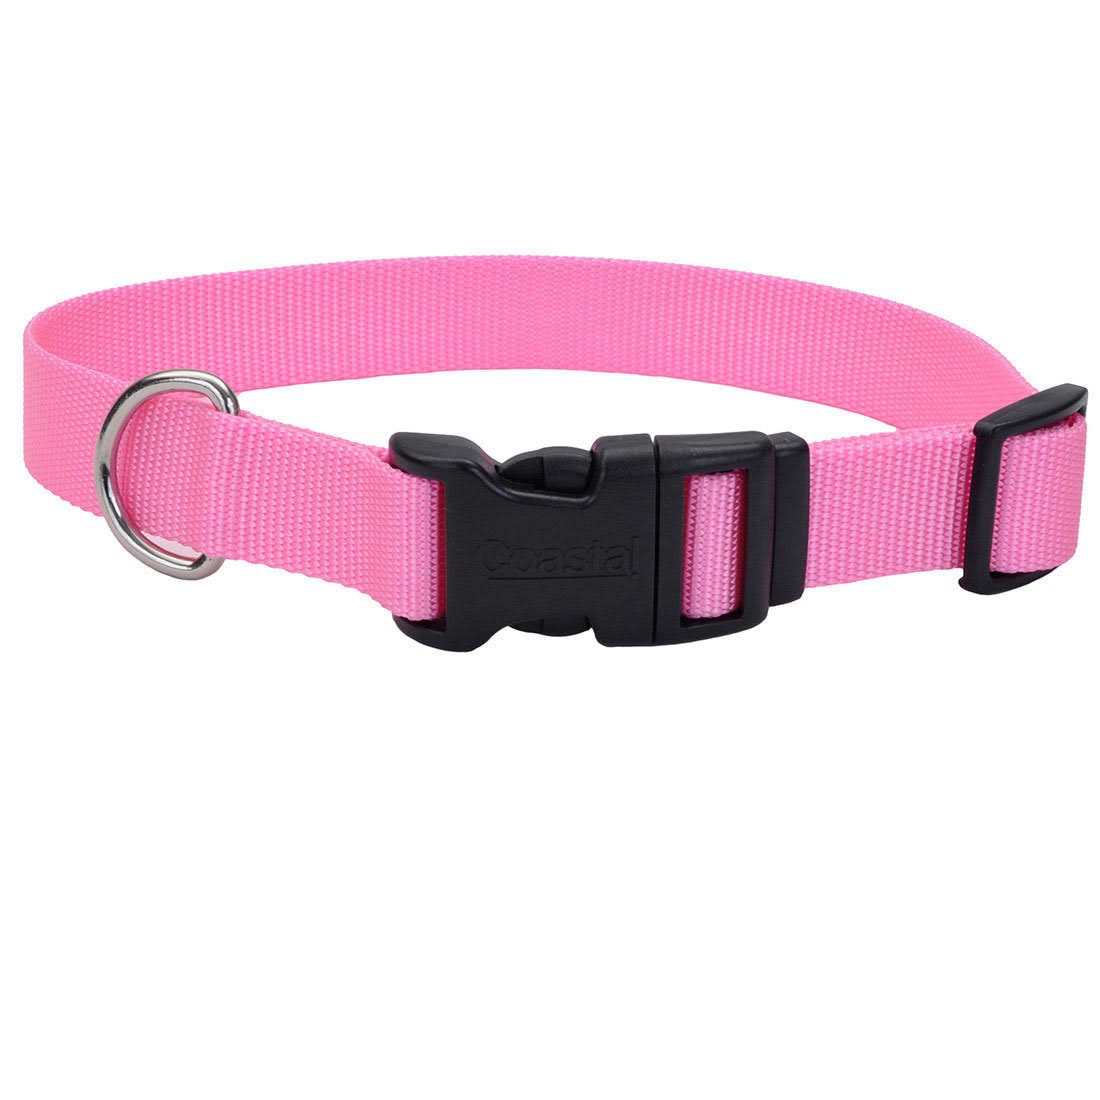 Coastal Pet Products Tuff Collar - Pink